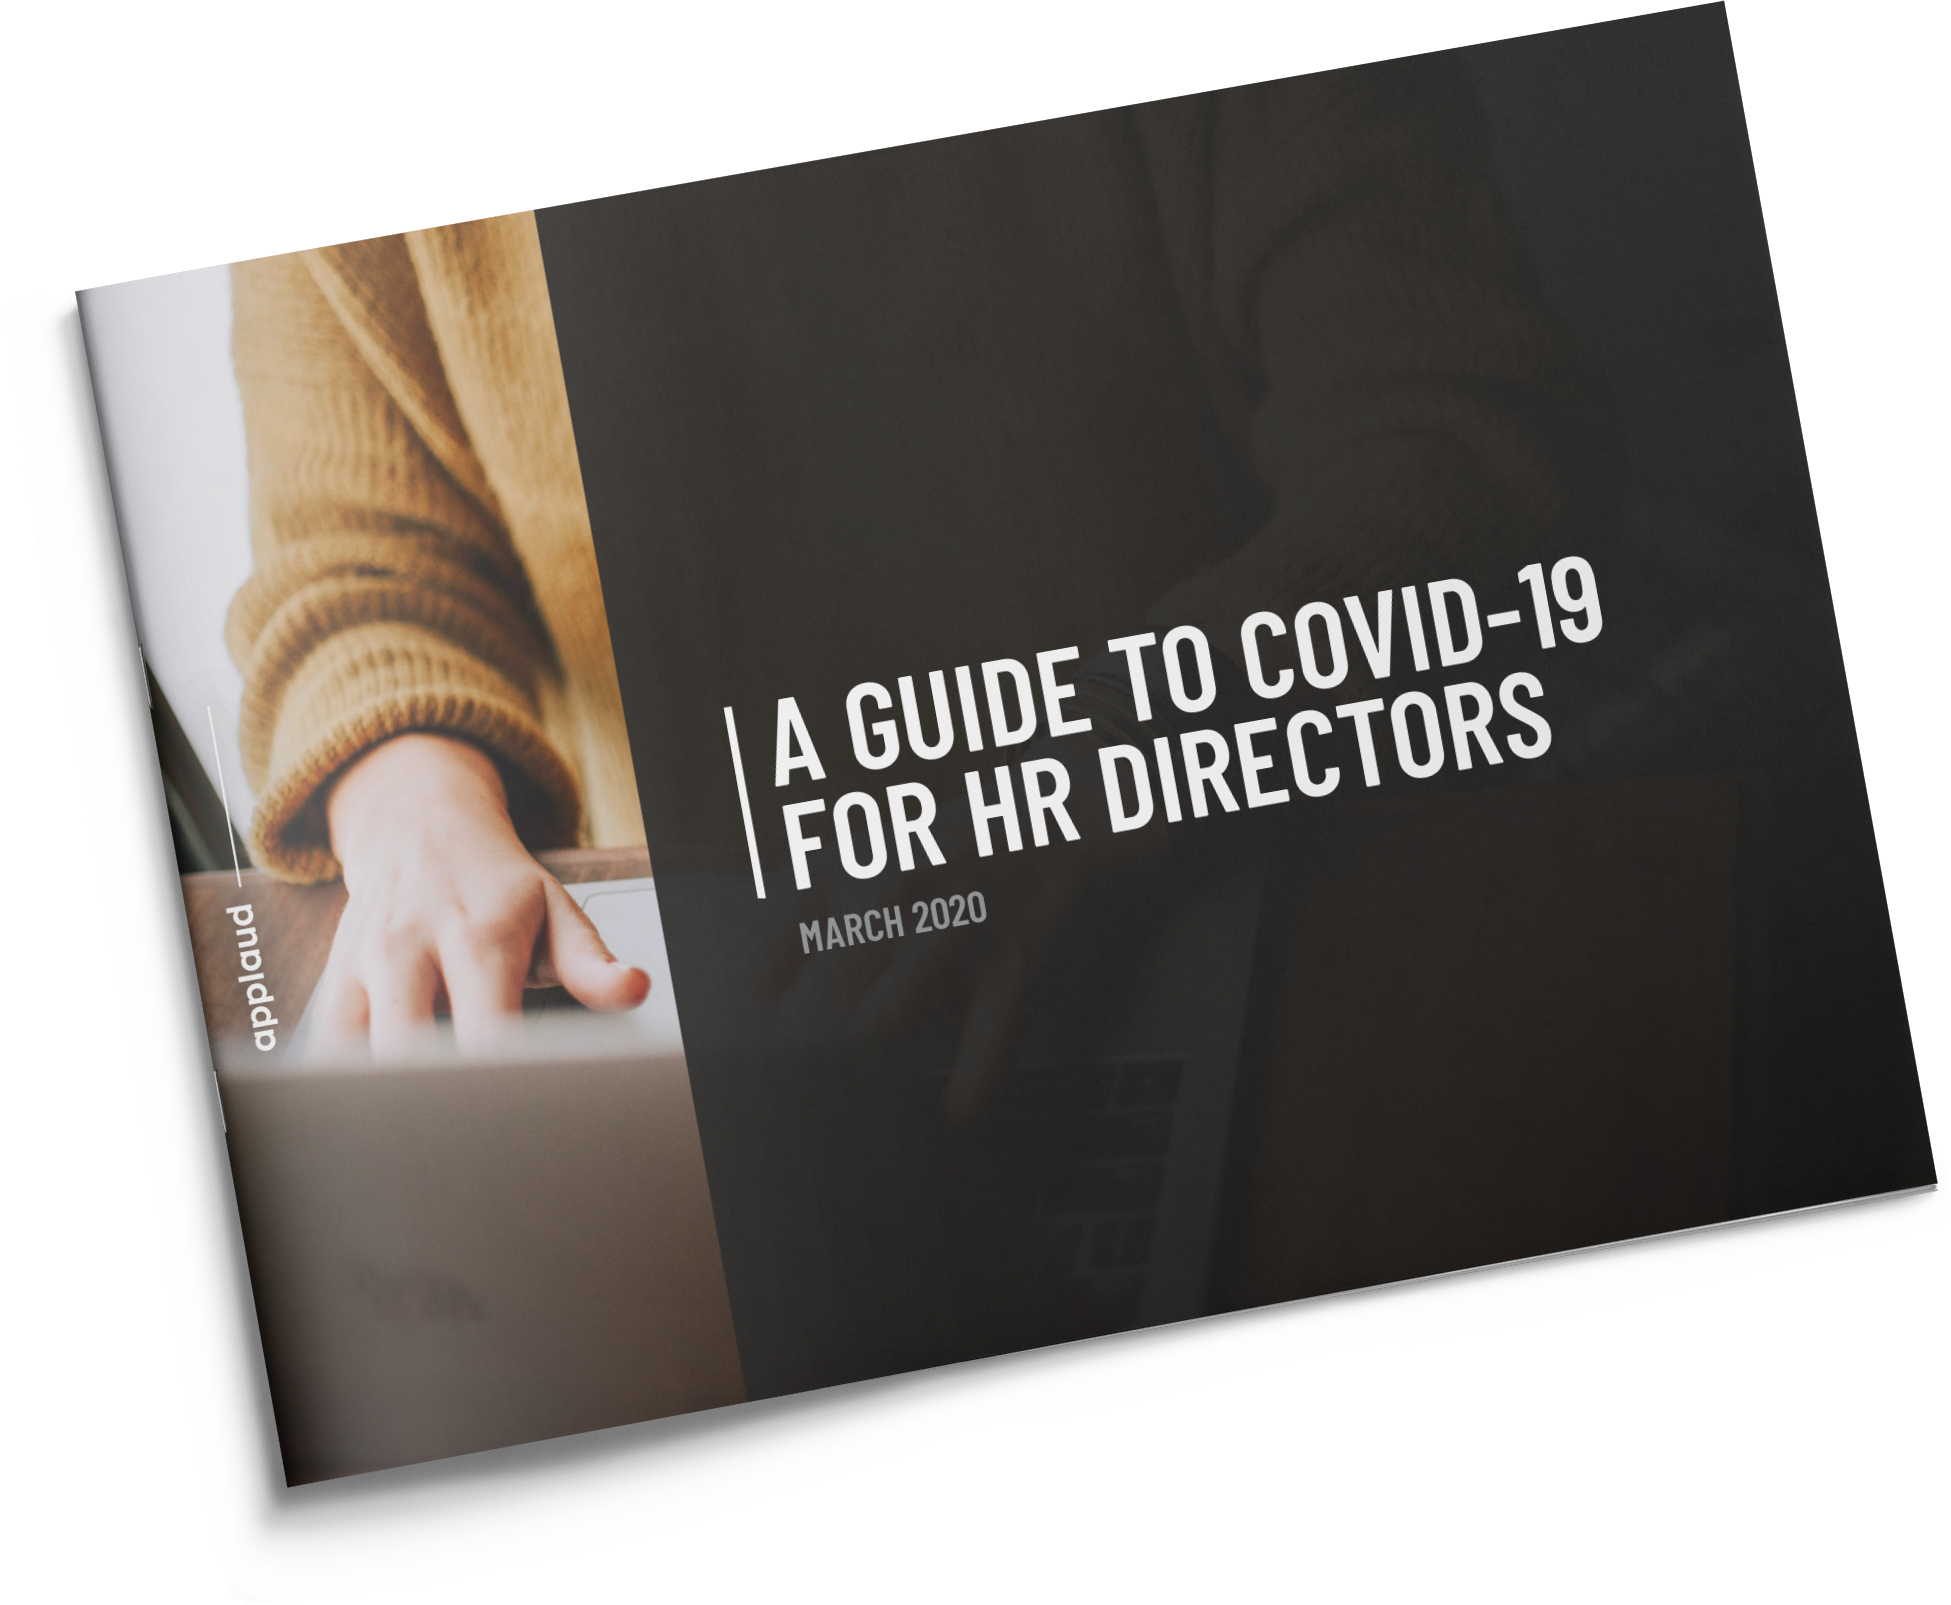 HR Directors Guide to COVID-19